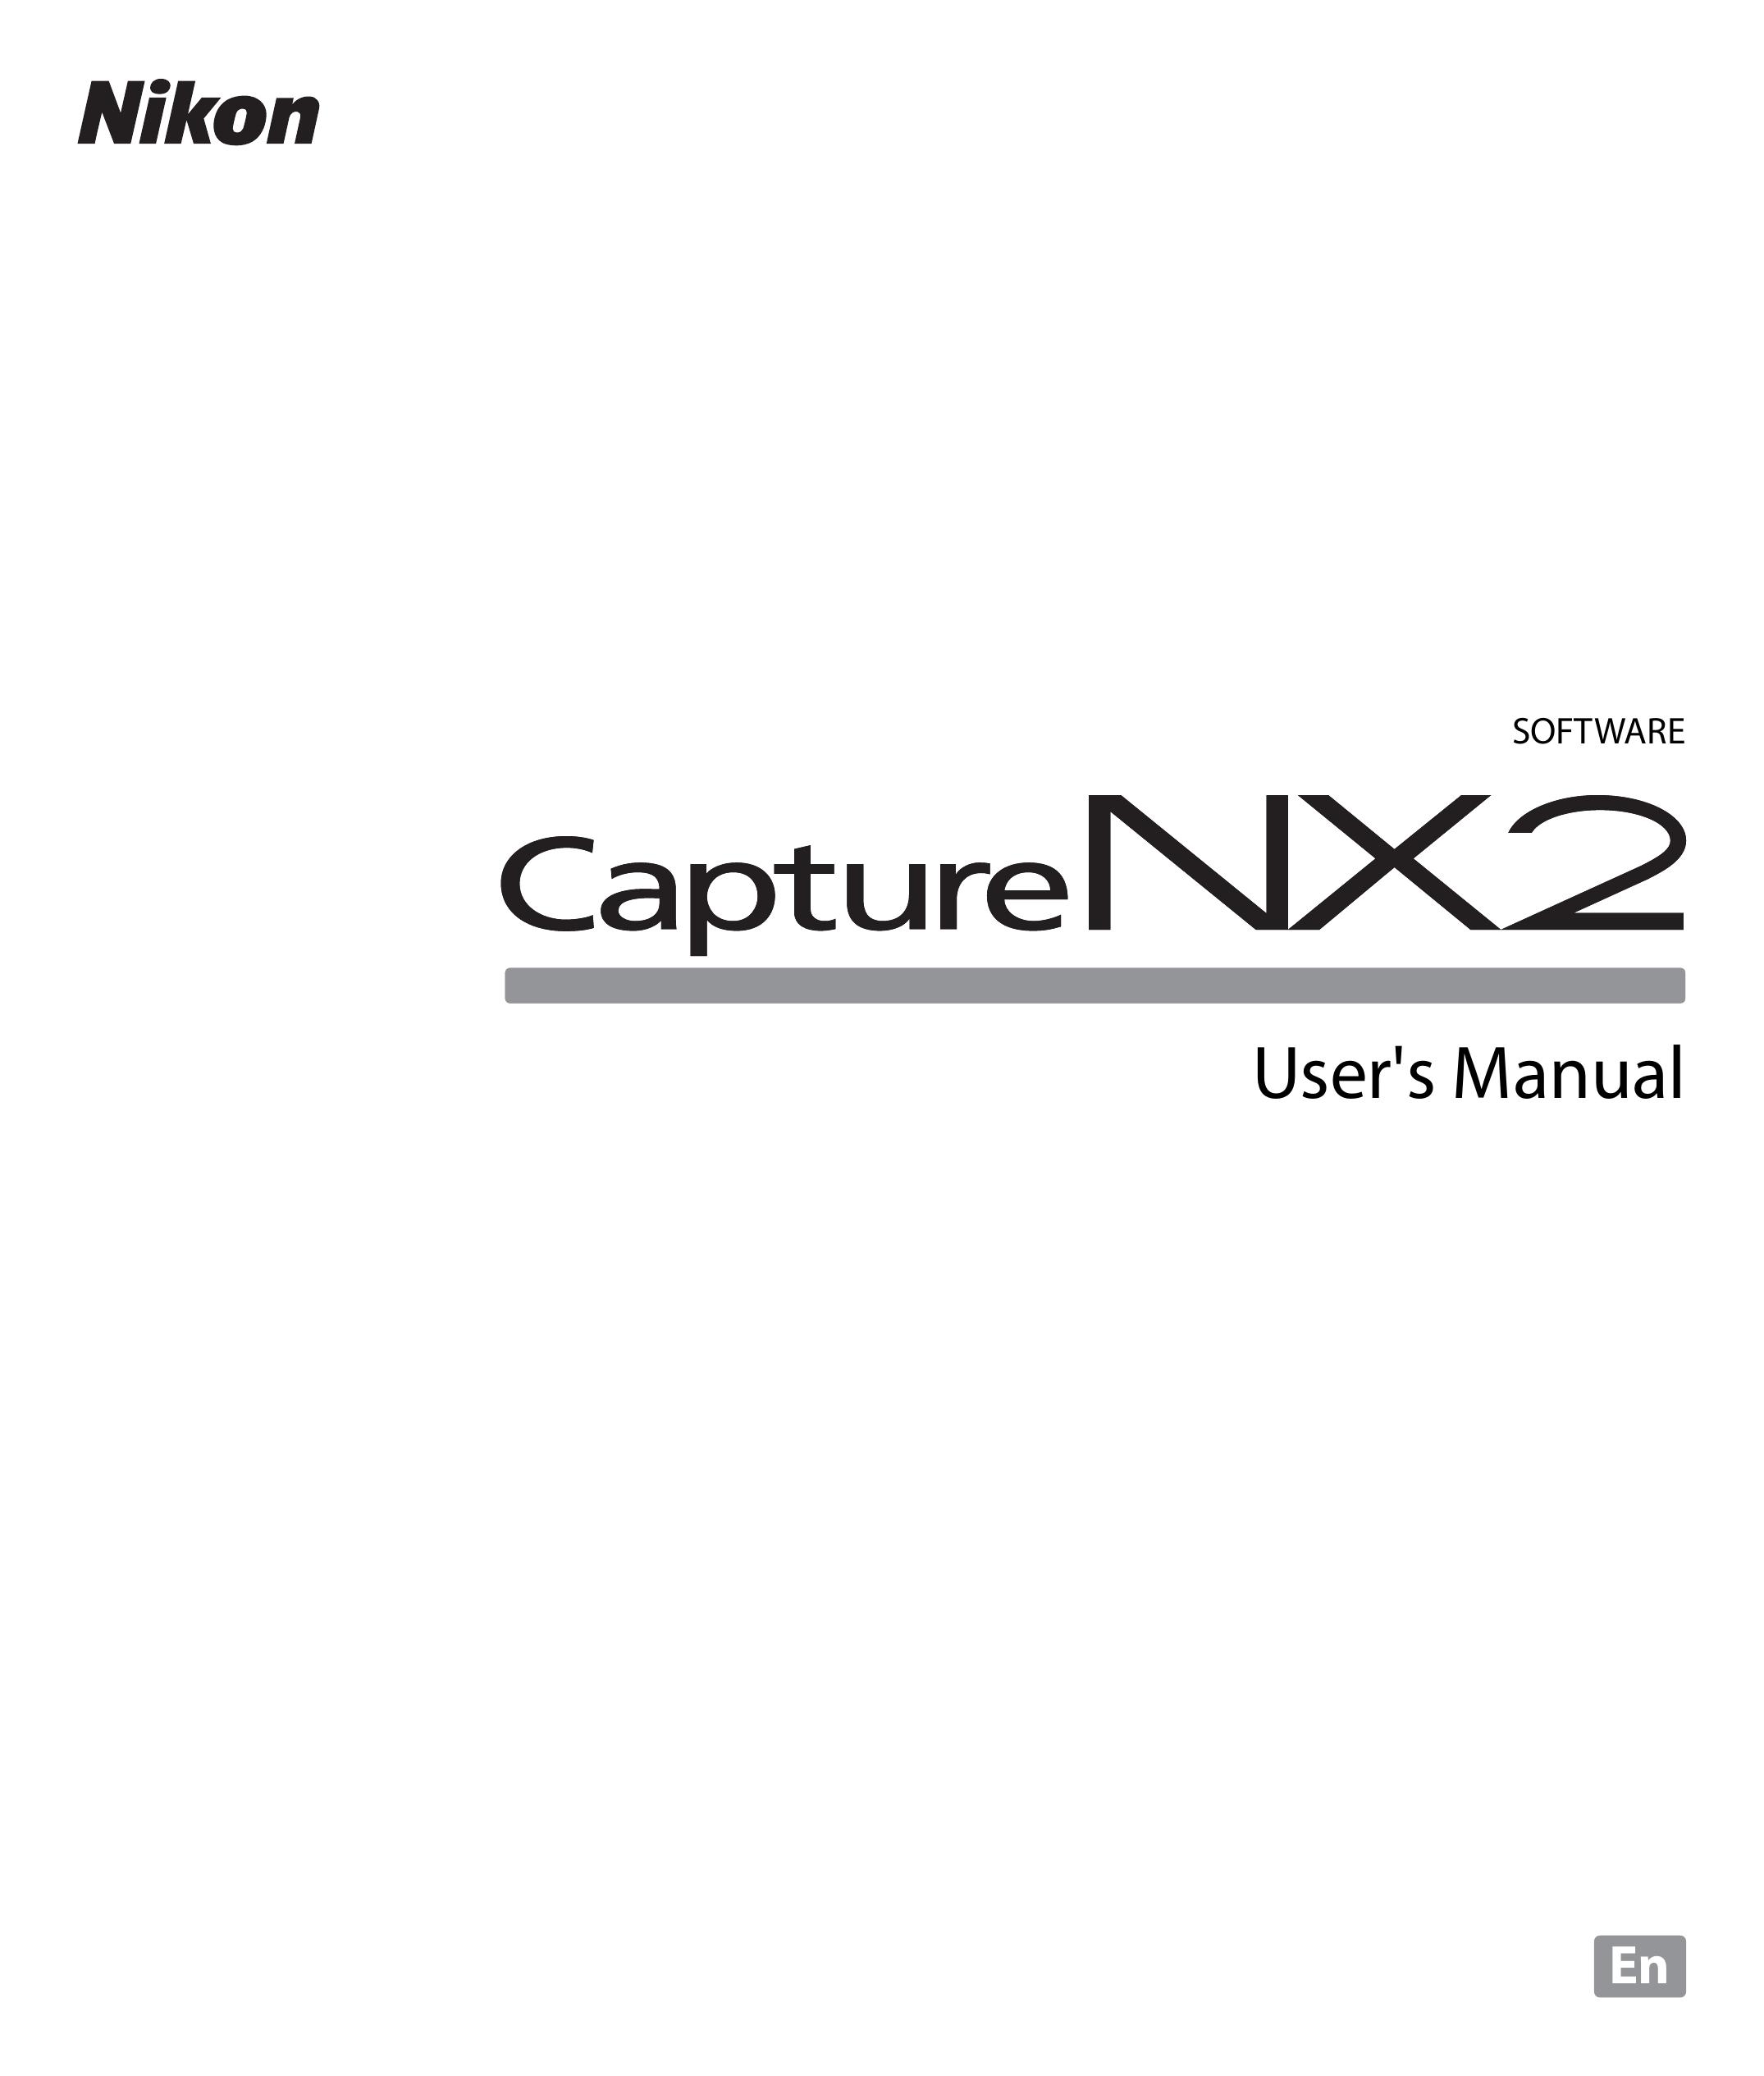 Nikon Capture NX2 Washer/Dryer User Manual